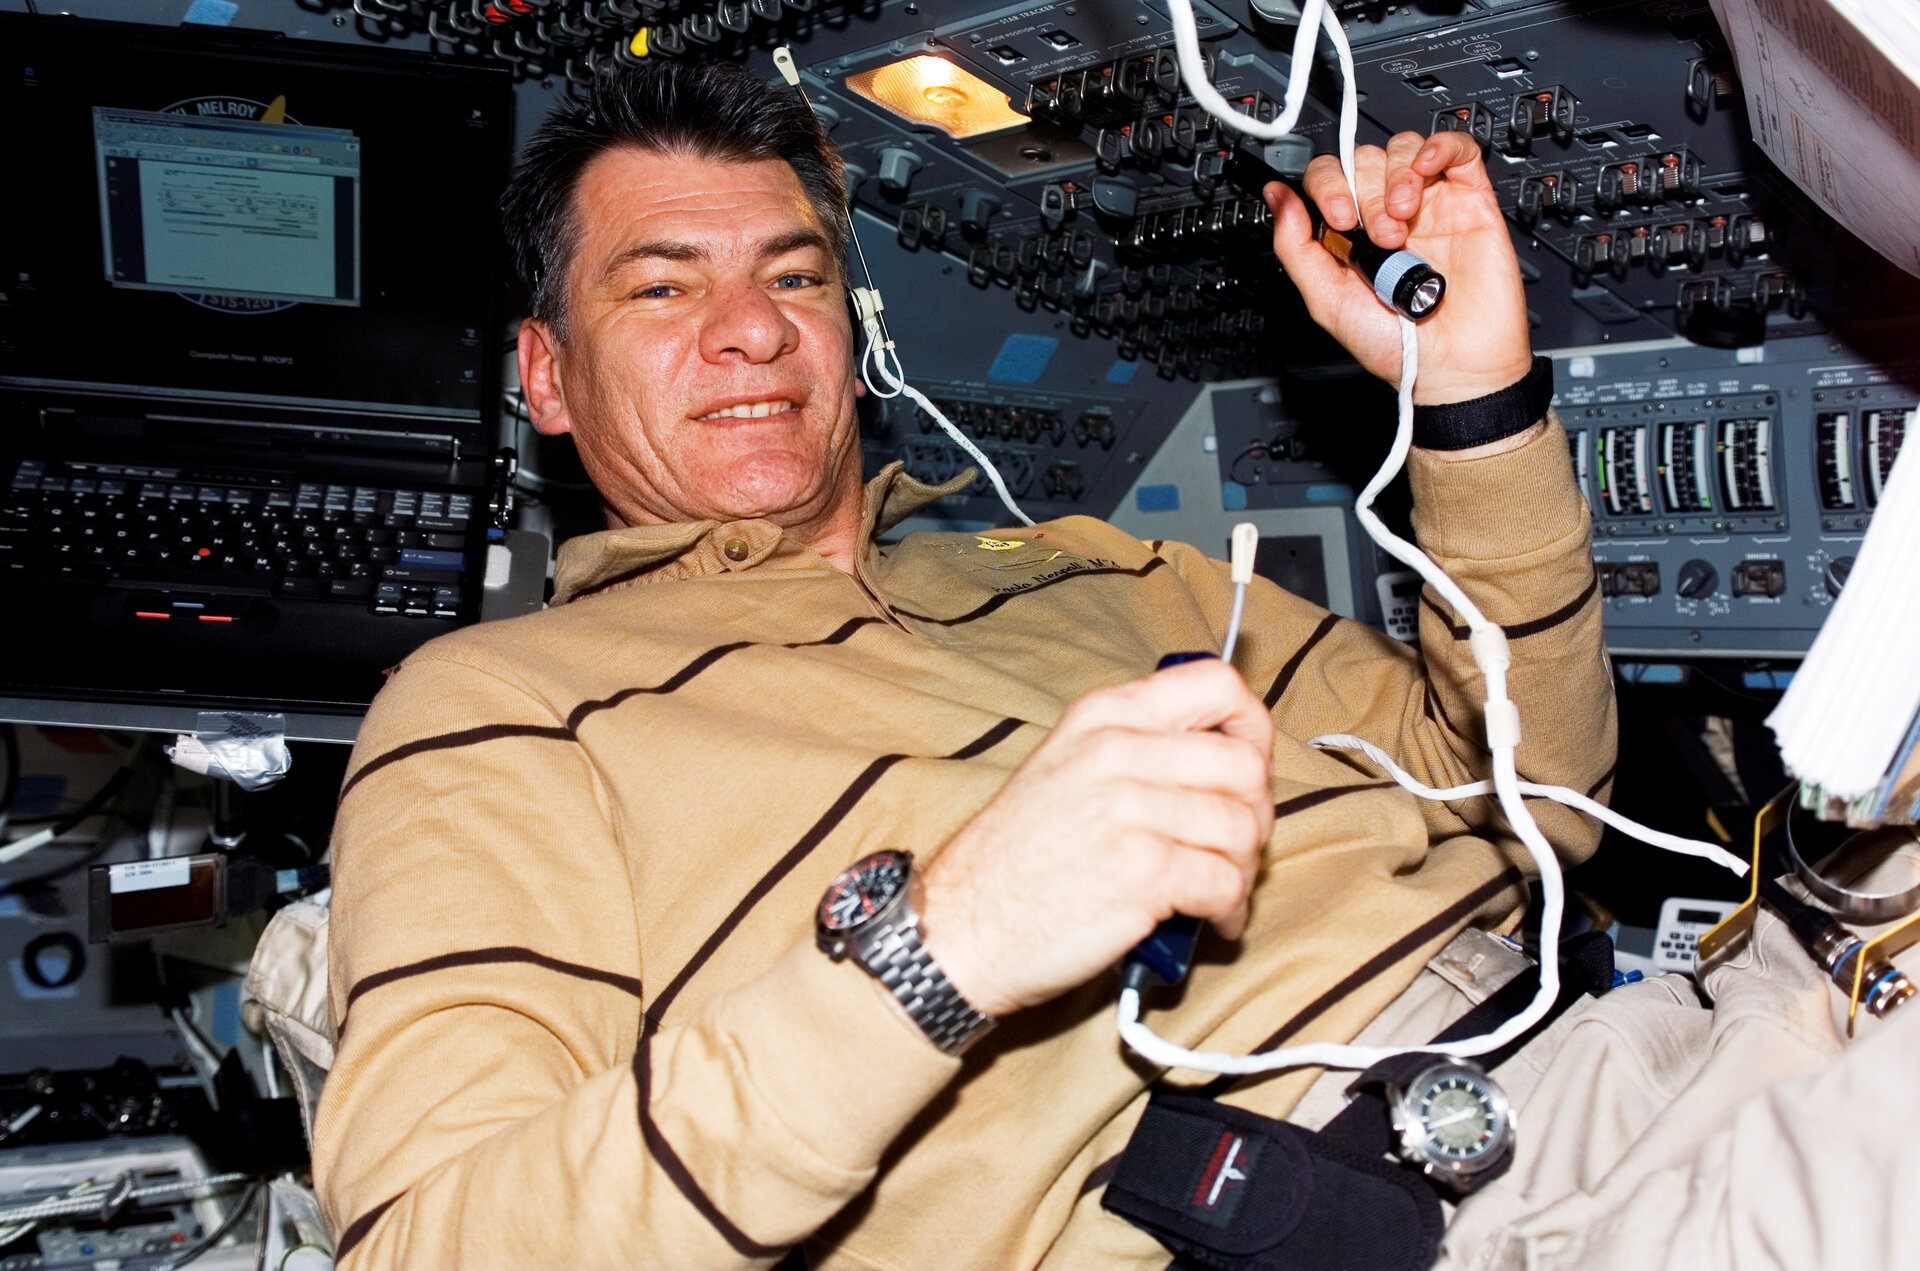 Paolo Nespoli uses communication system on the Shuttle flight deck